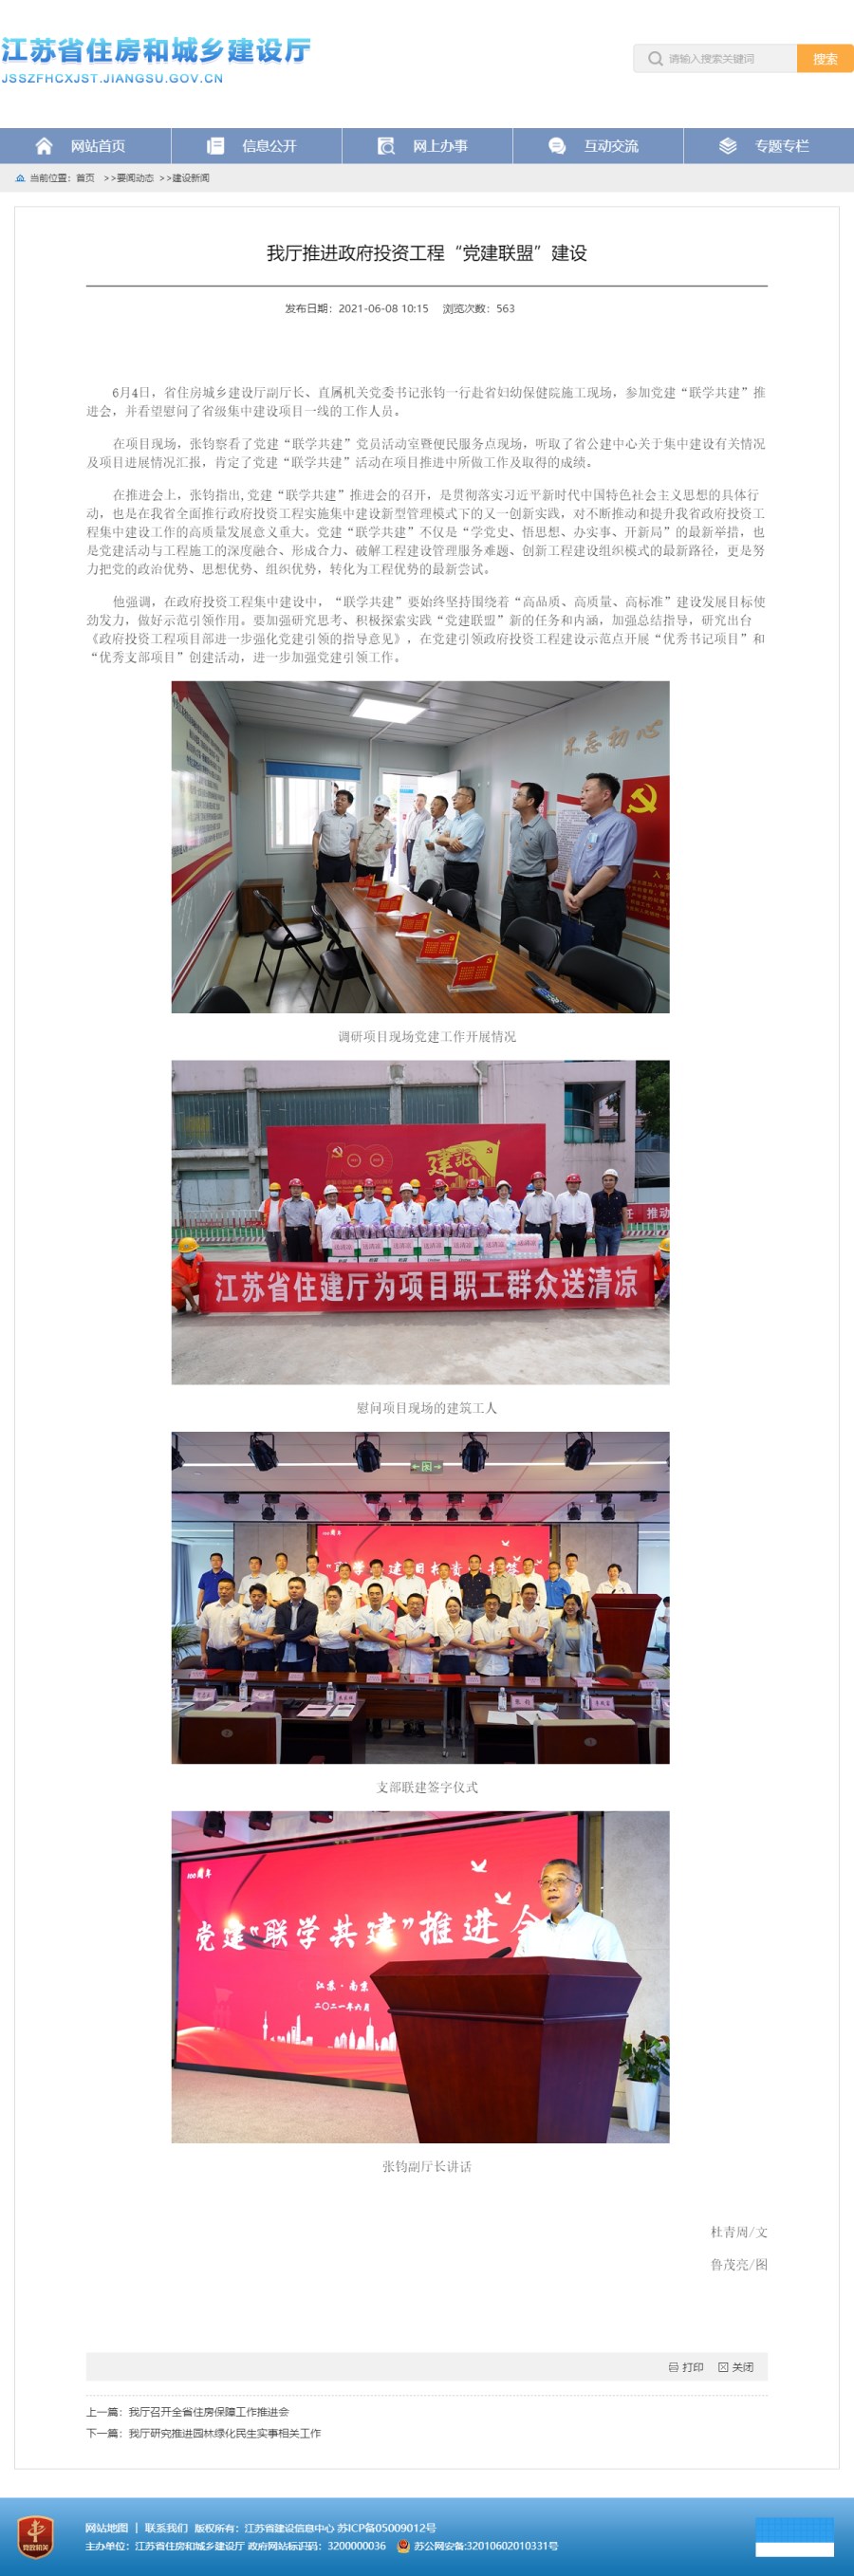 jscin.jiangsu.gov.cn_art_2021_6_8_art_8637_9842593.html.png